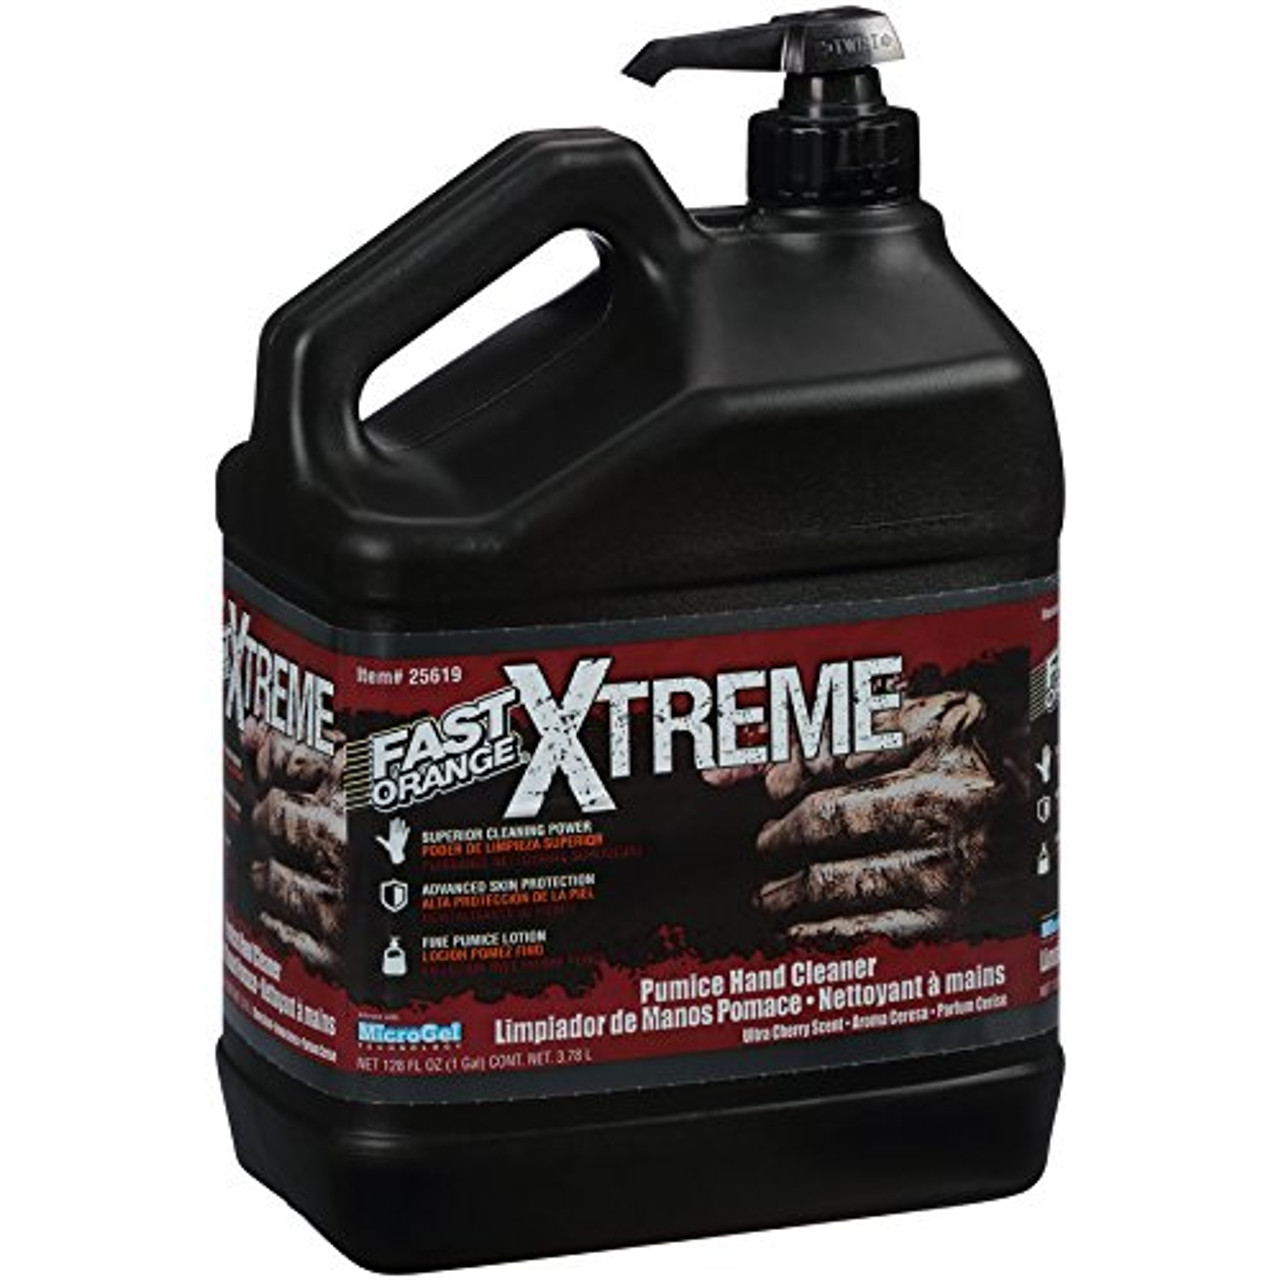 Permatex 25618 Fast Orange Xtreme Hand Cleaner, 1 gallon